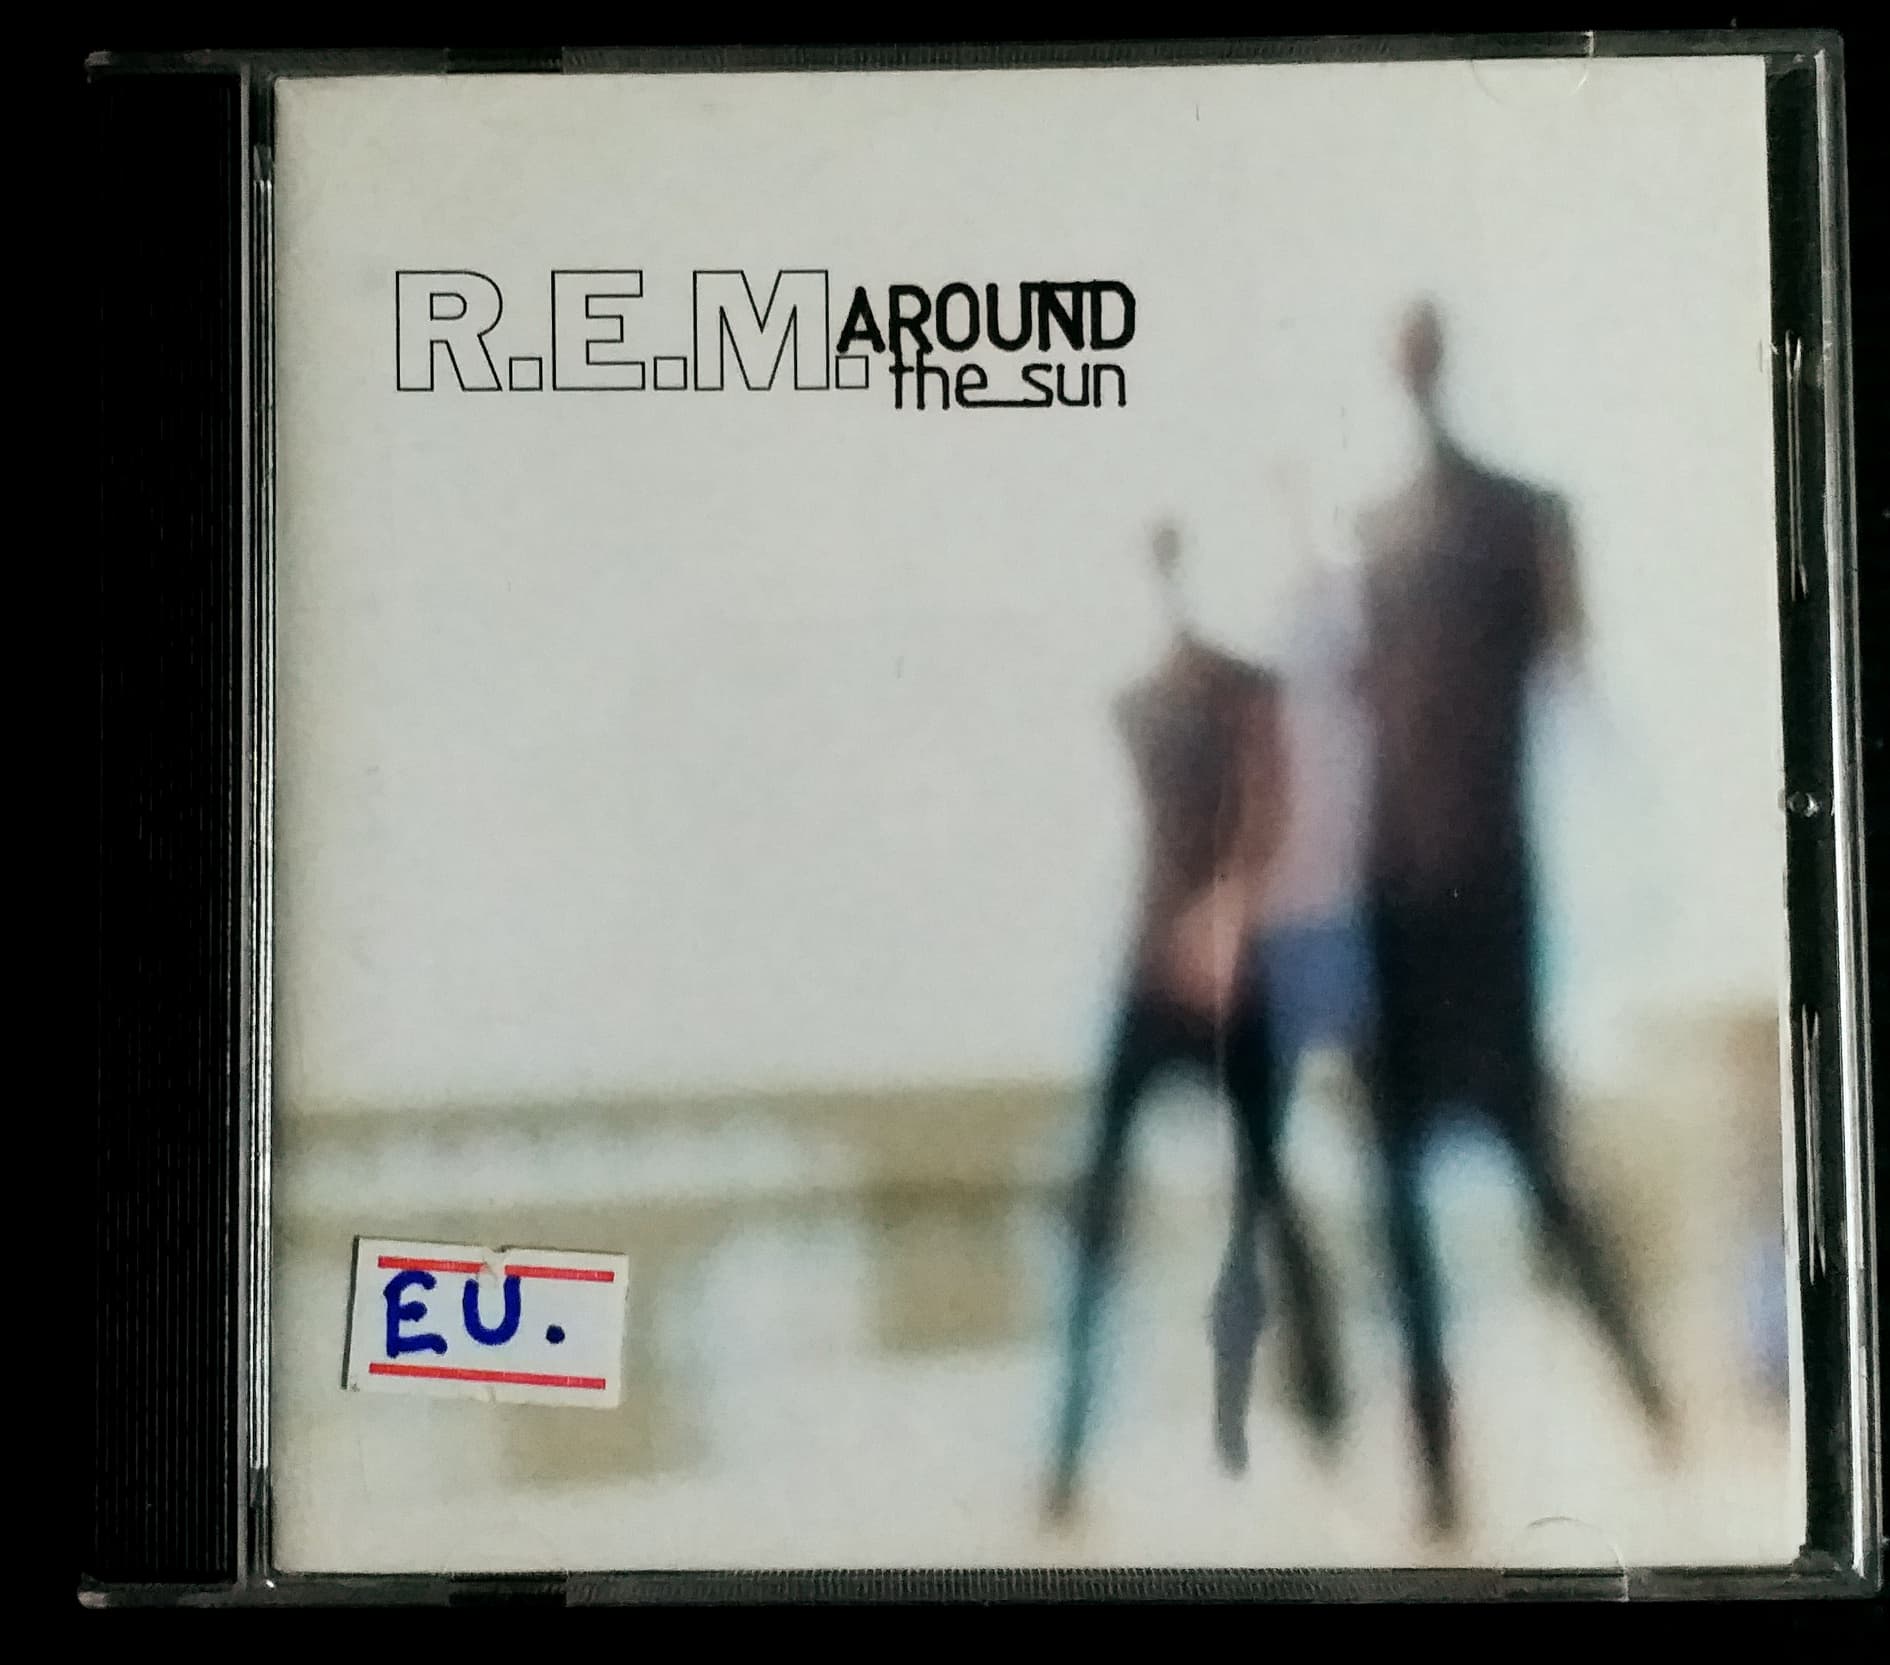 CD AROUND THE SUN BY R.E.M. MADE IN EU